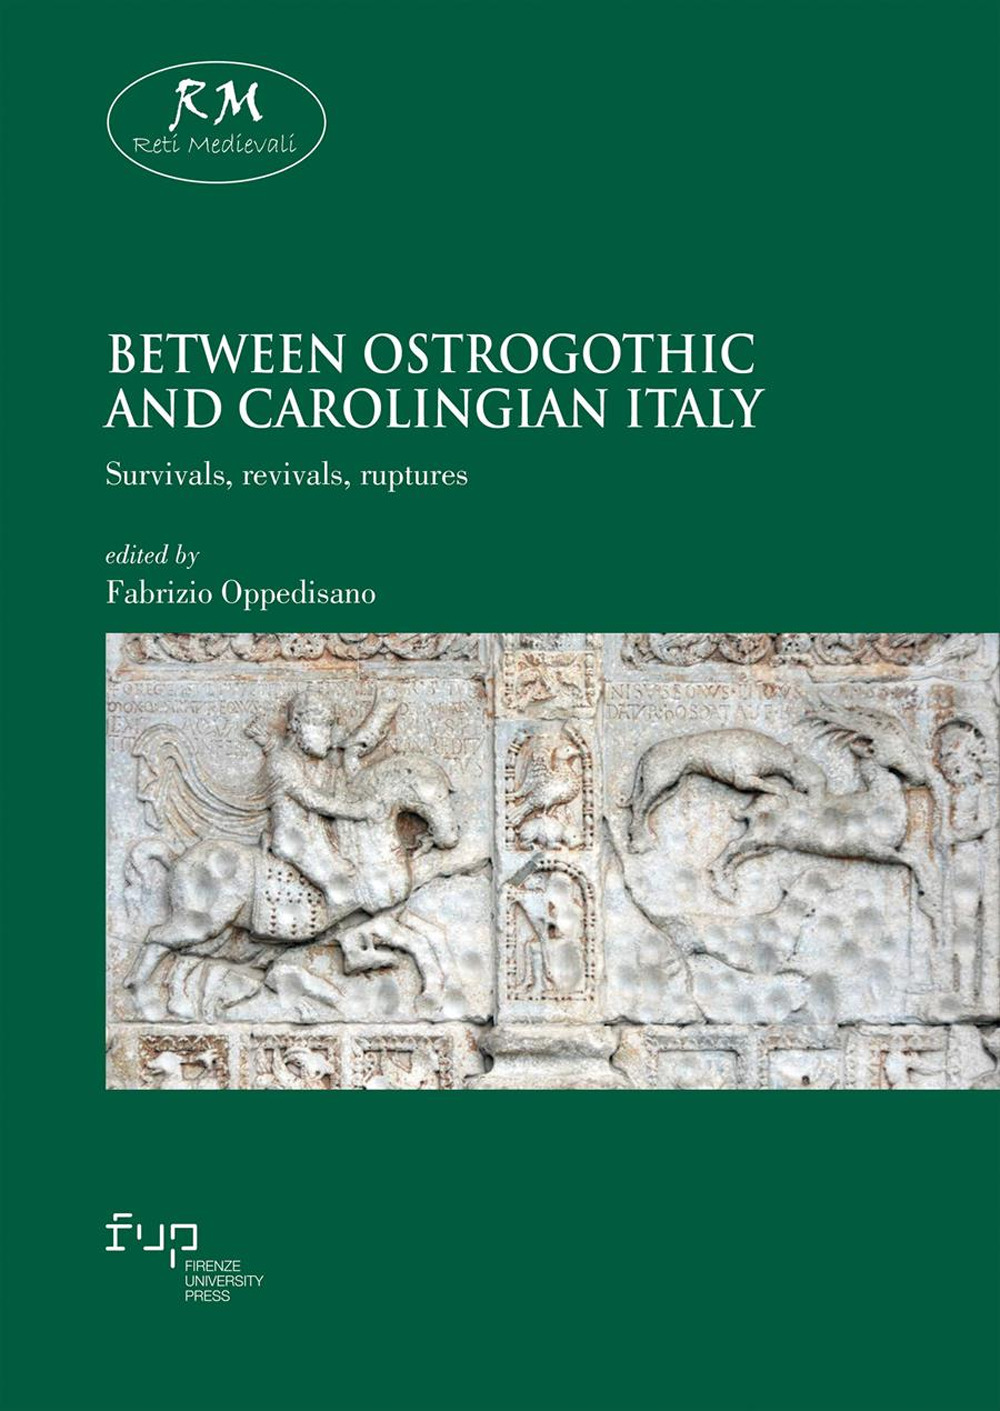 Between Ostrogothic and Carolingian Italy. Survivals, revivals, ruptures